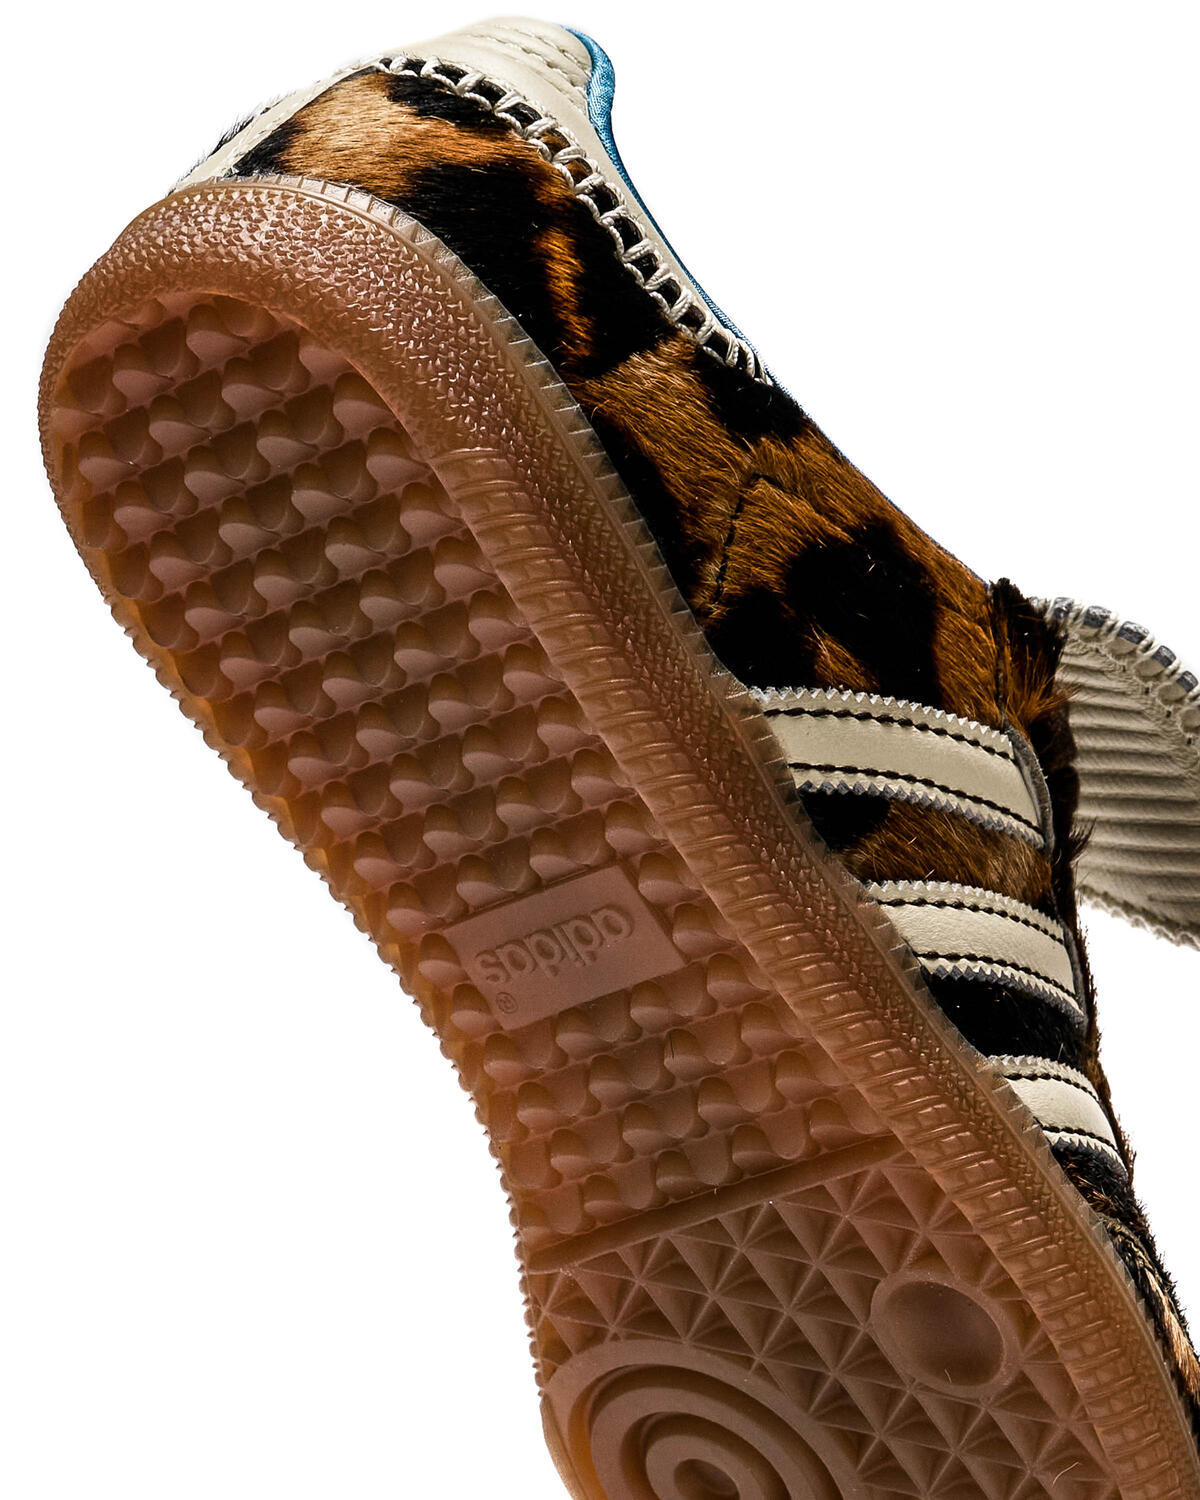 Adidas originals x Wales Bonner PONY LEO SAMBA | IE0578